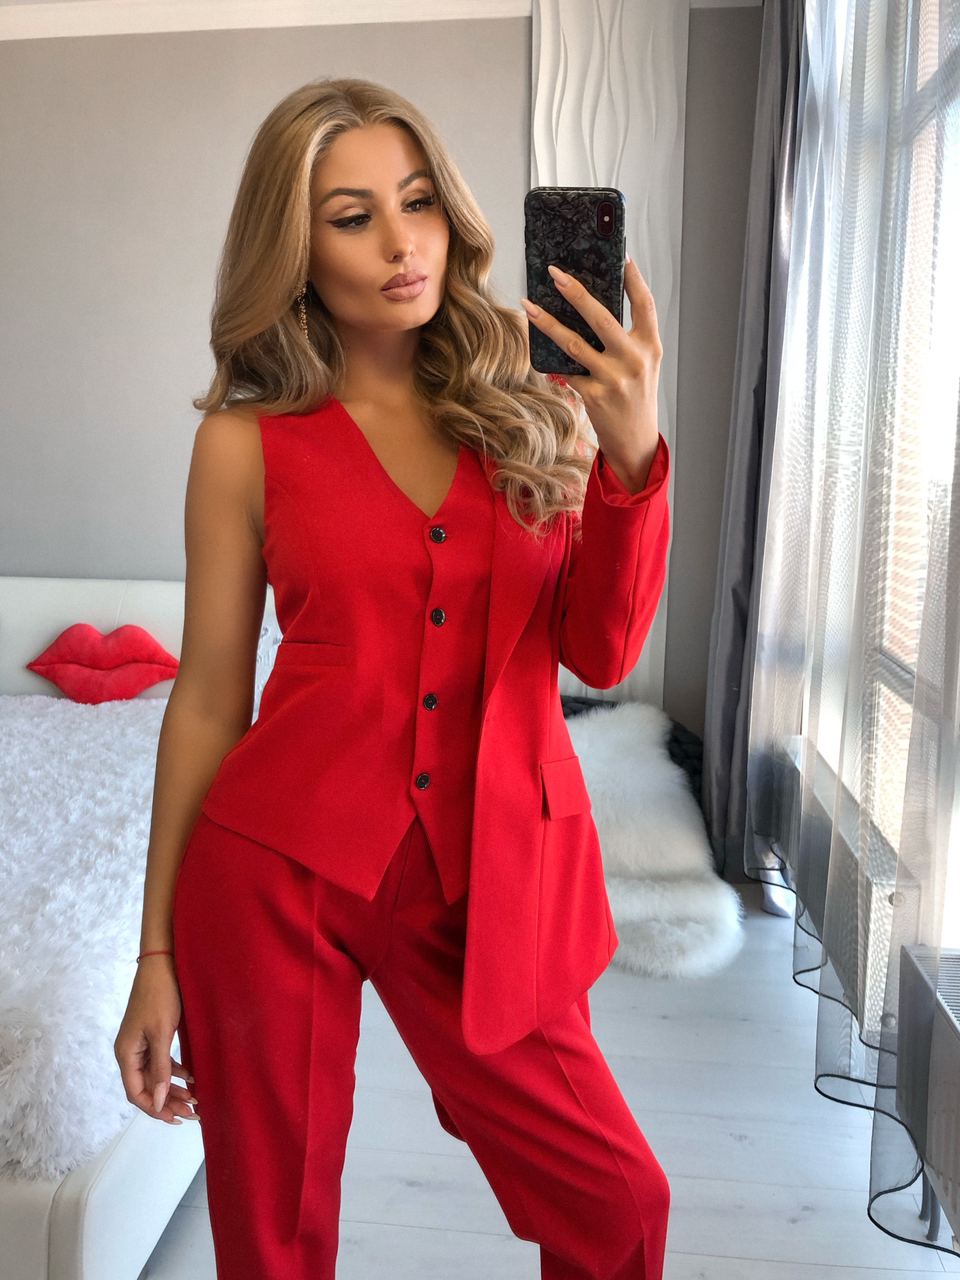 Red Office Slim-Fit 3-Piece Suit